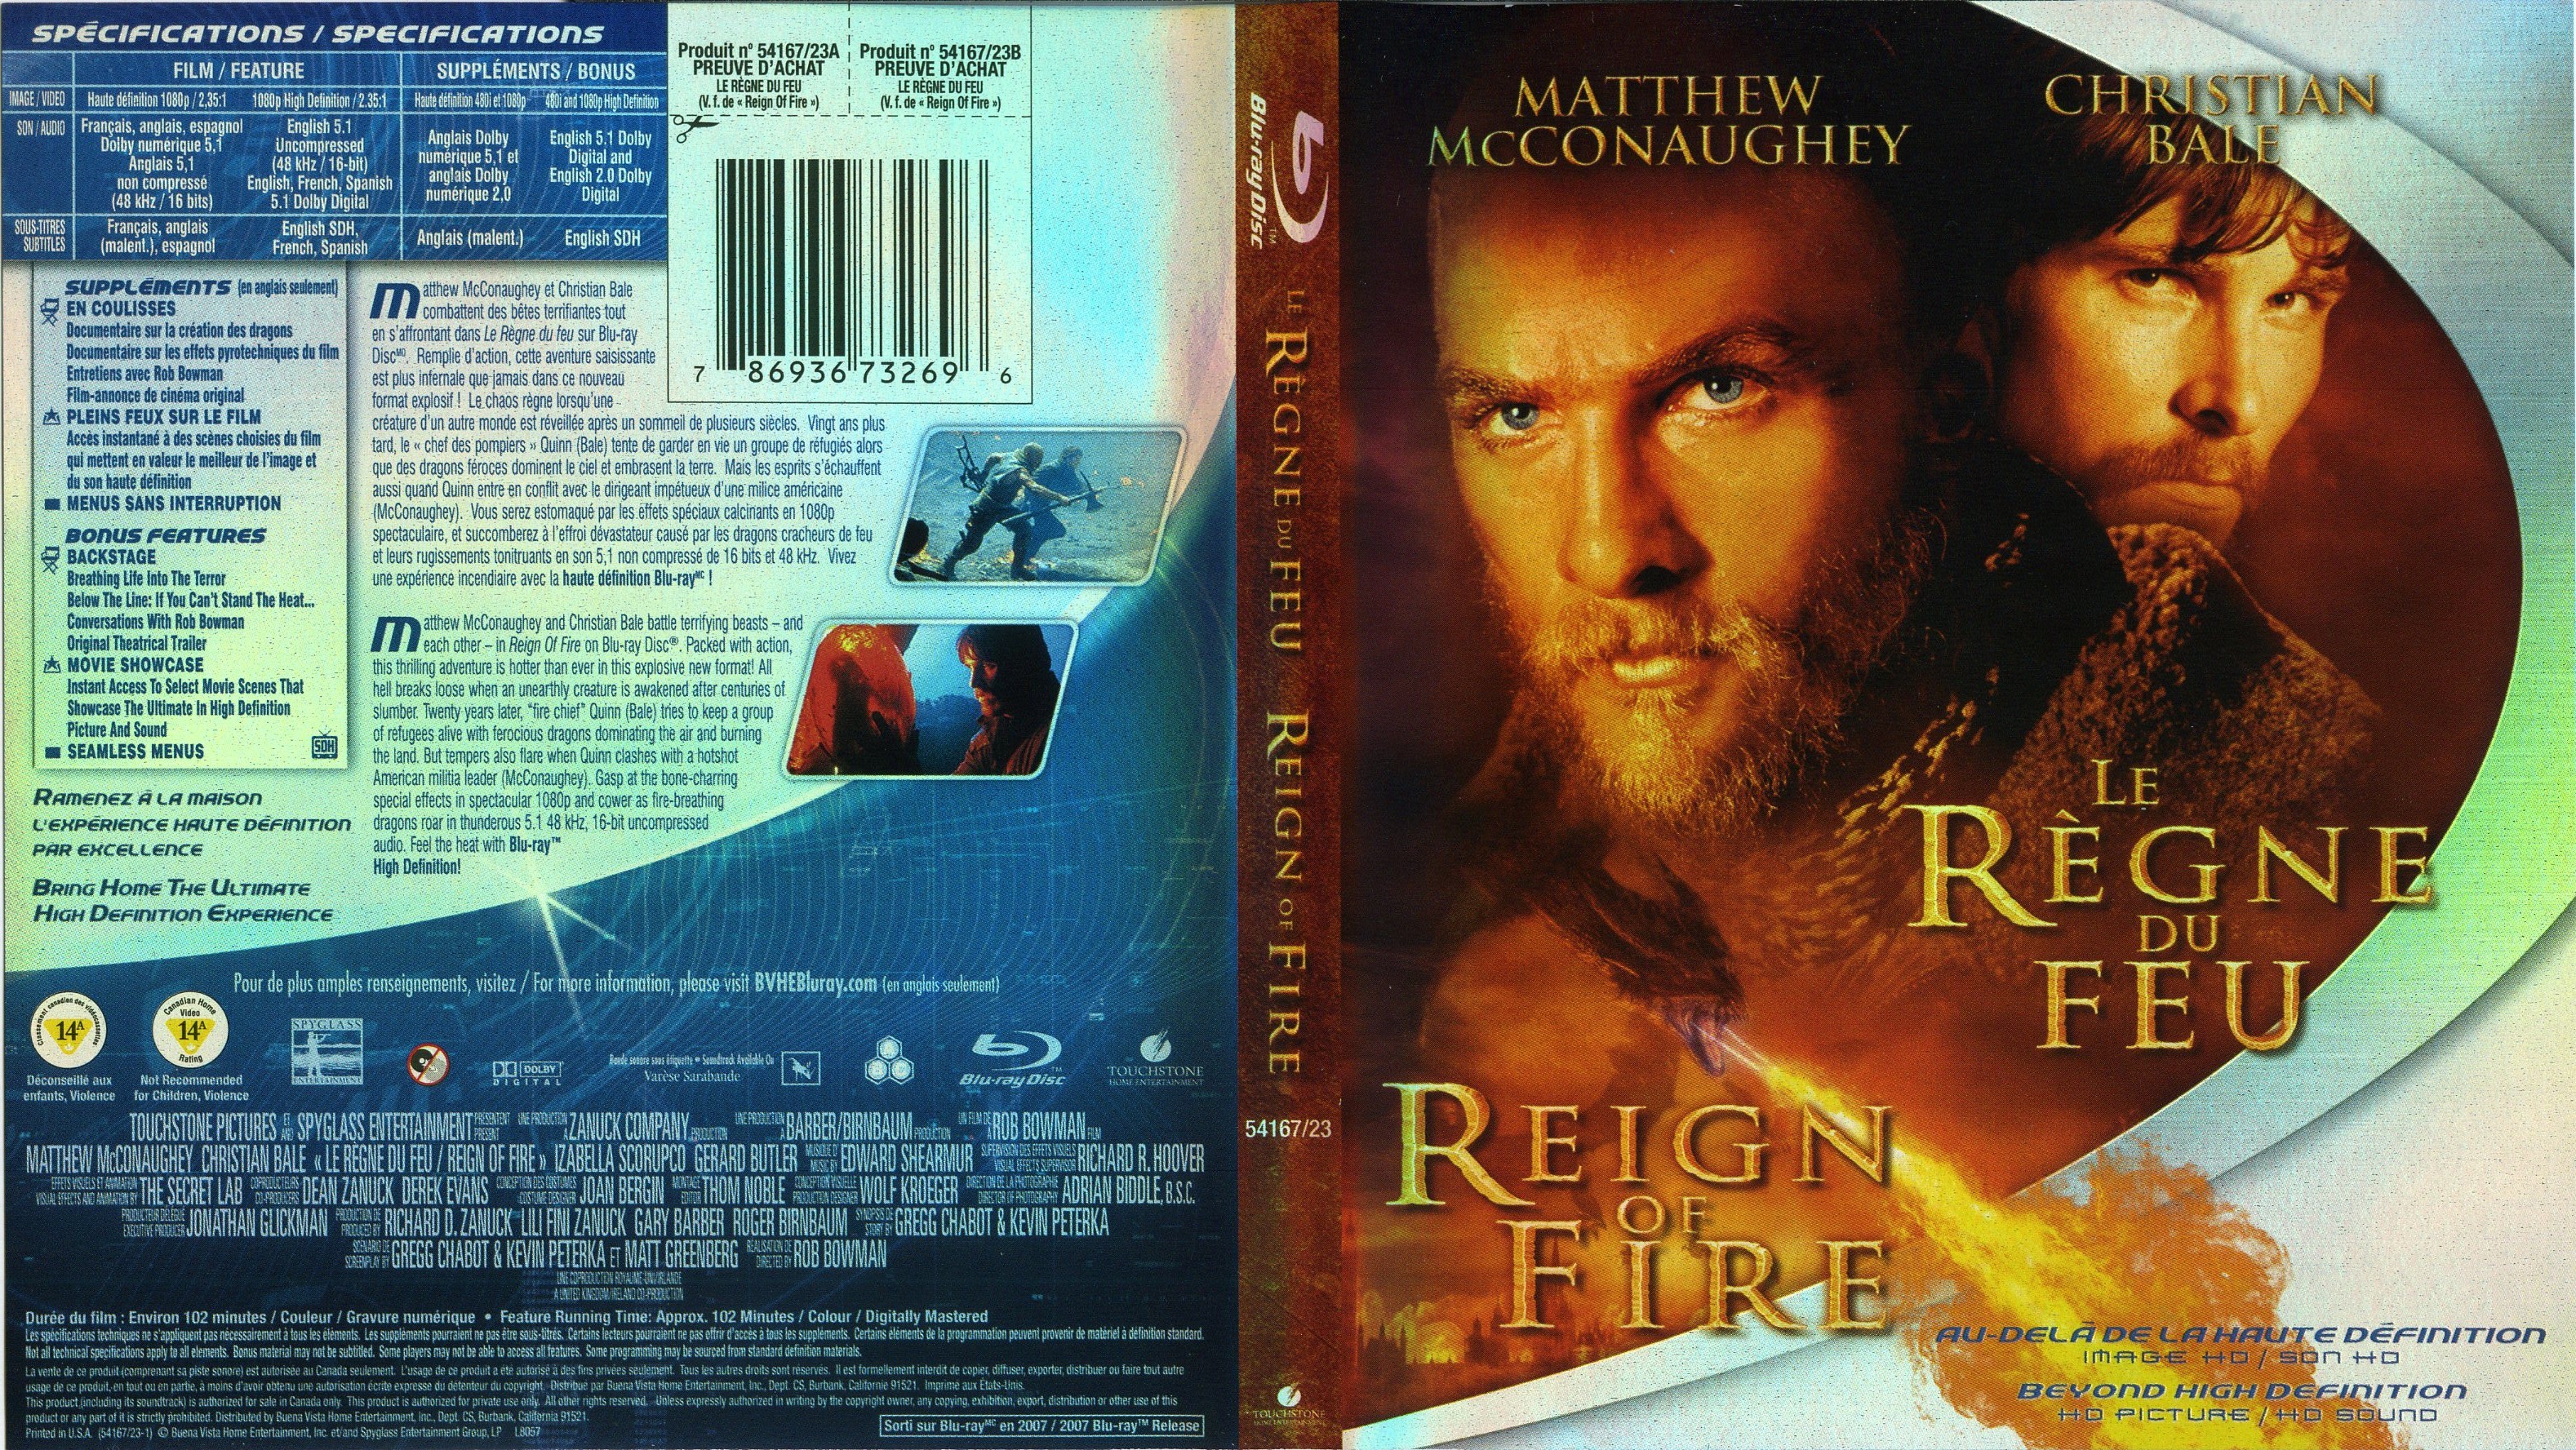 Jaquette DVD Le rgne du feu - Reign of fire (Canadienne) (BLU-RAY)